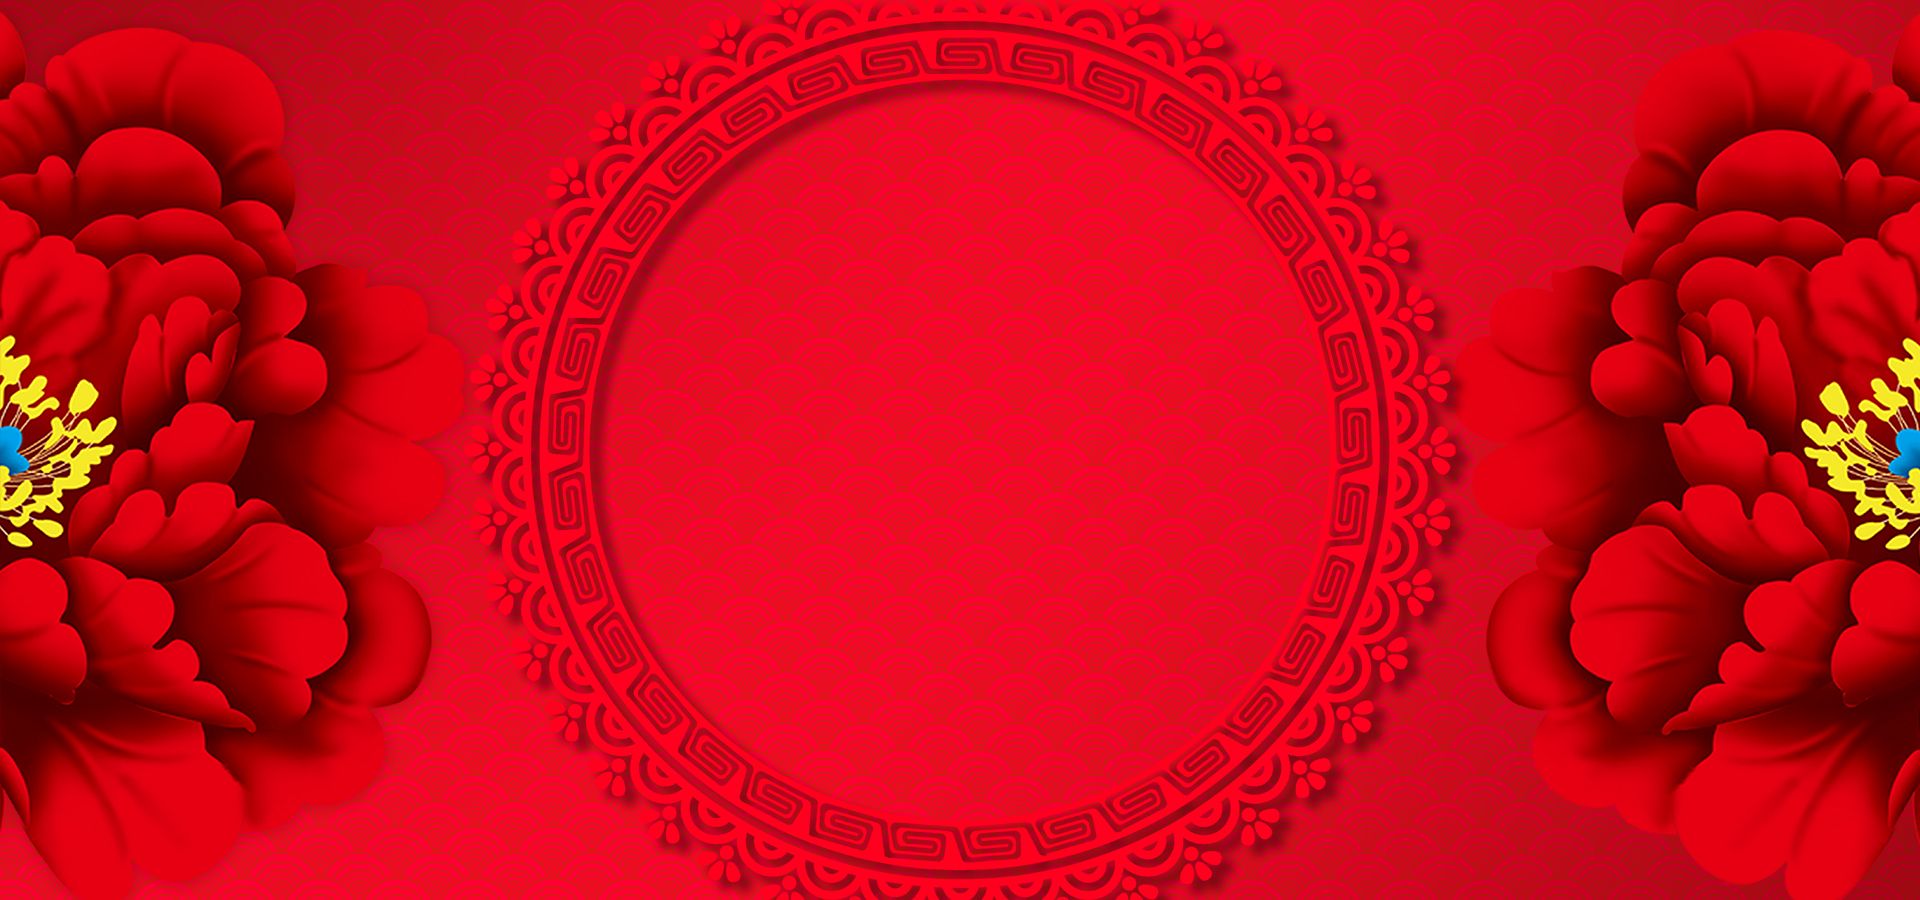 Chinese New Year Red Background wedding Chinese new year